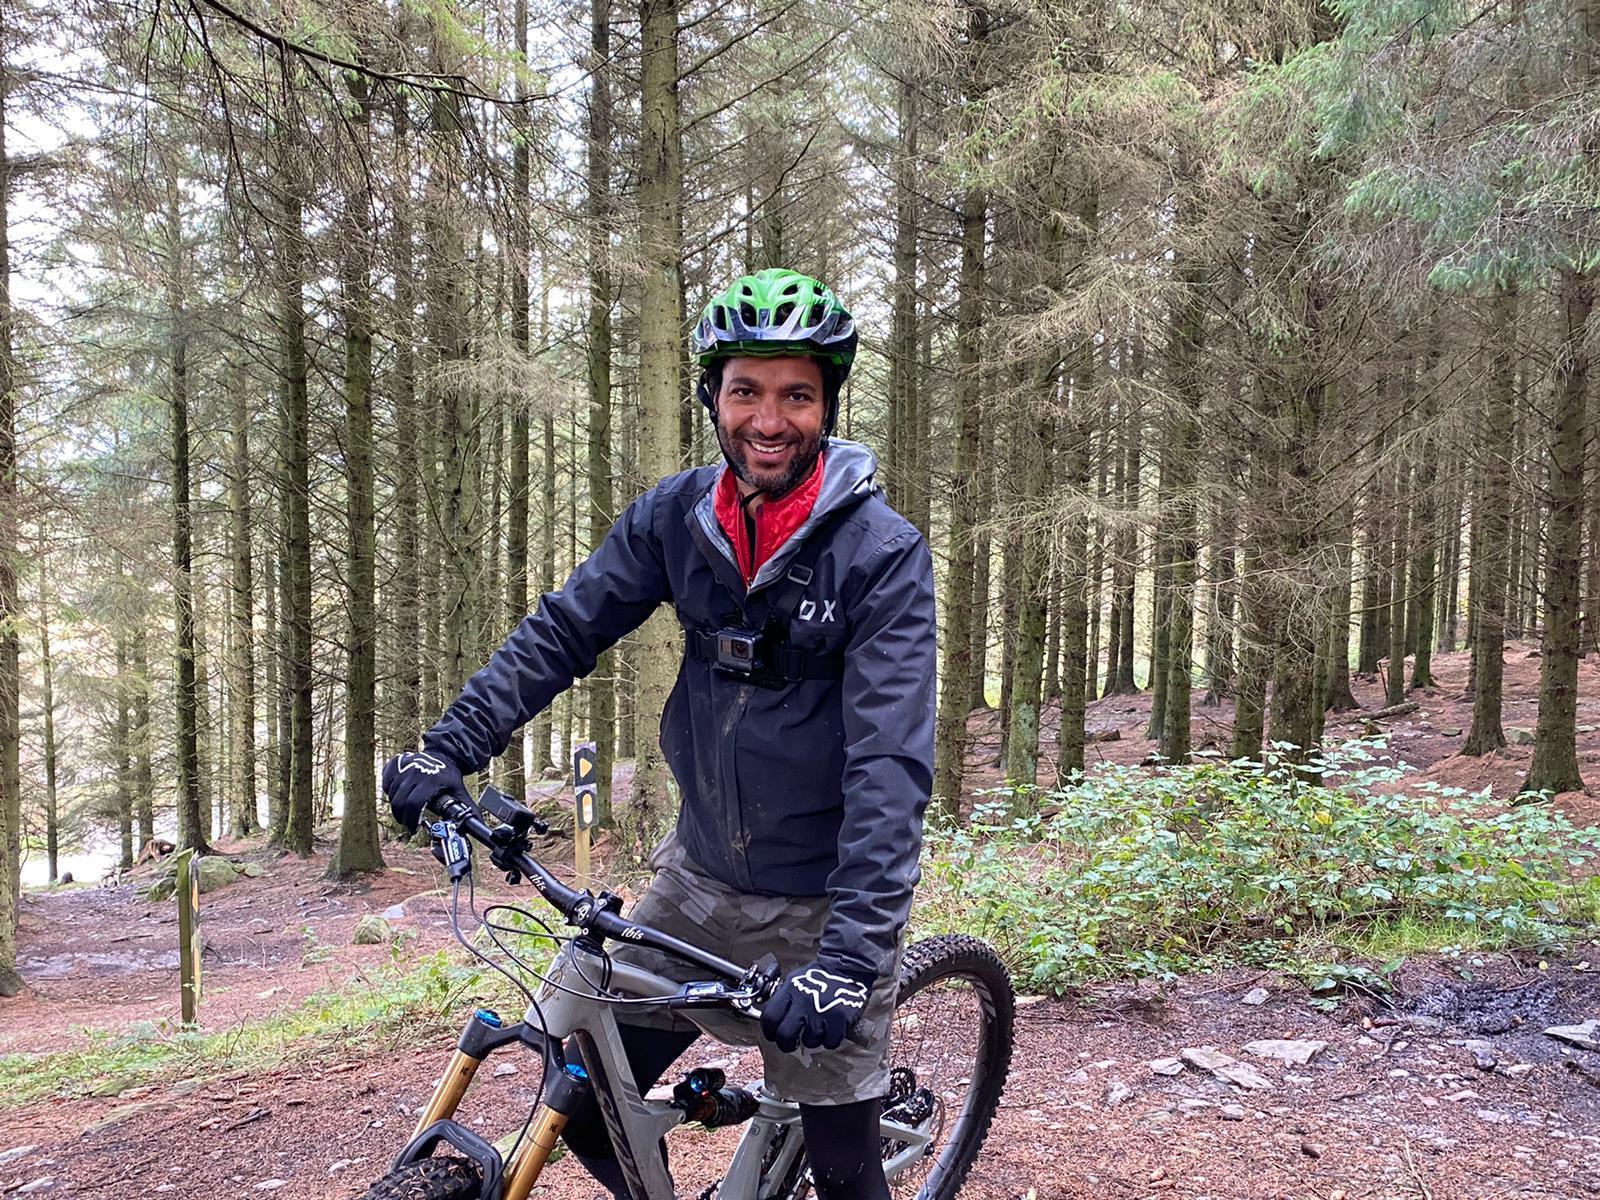 Sean tries out mountain biking in the Llandegla forest